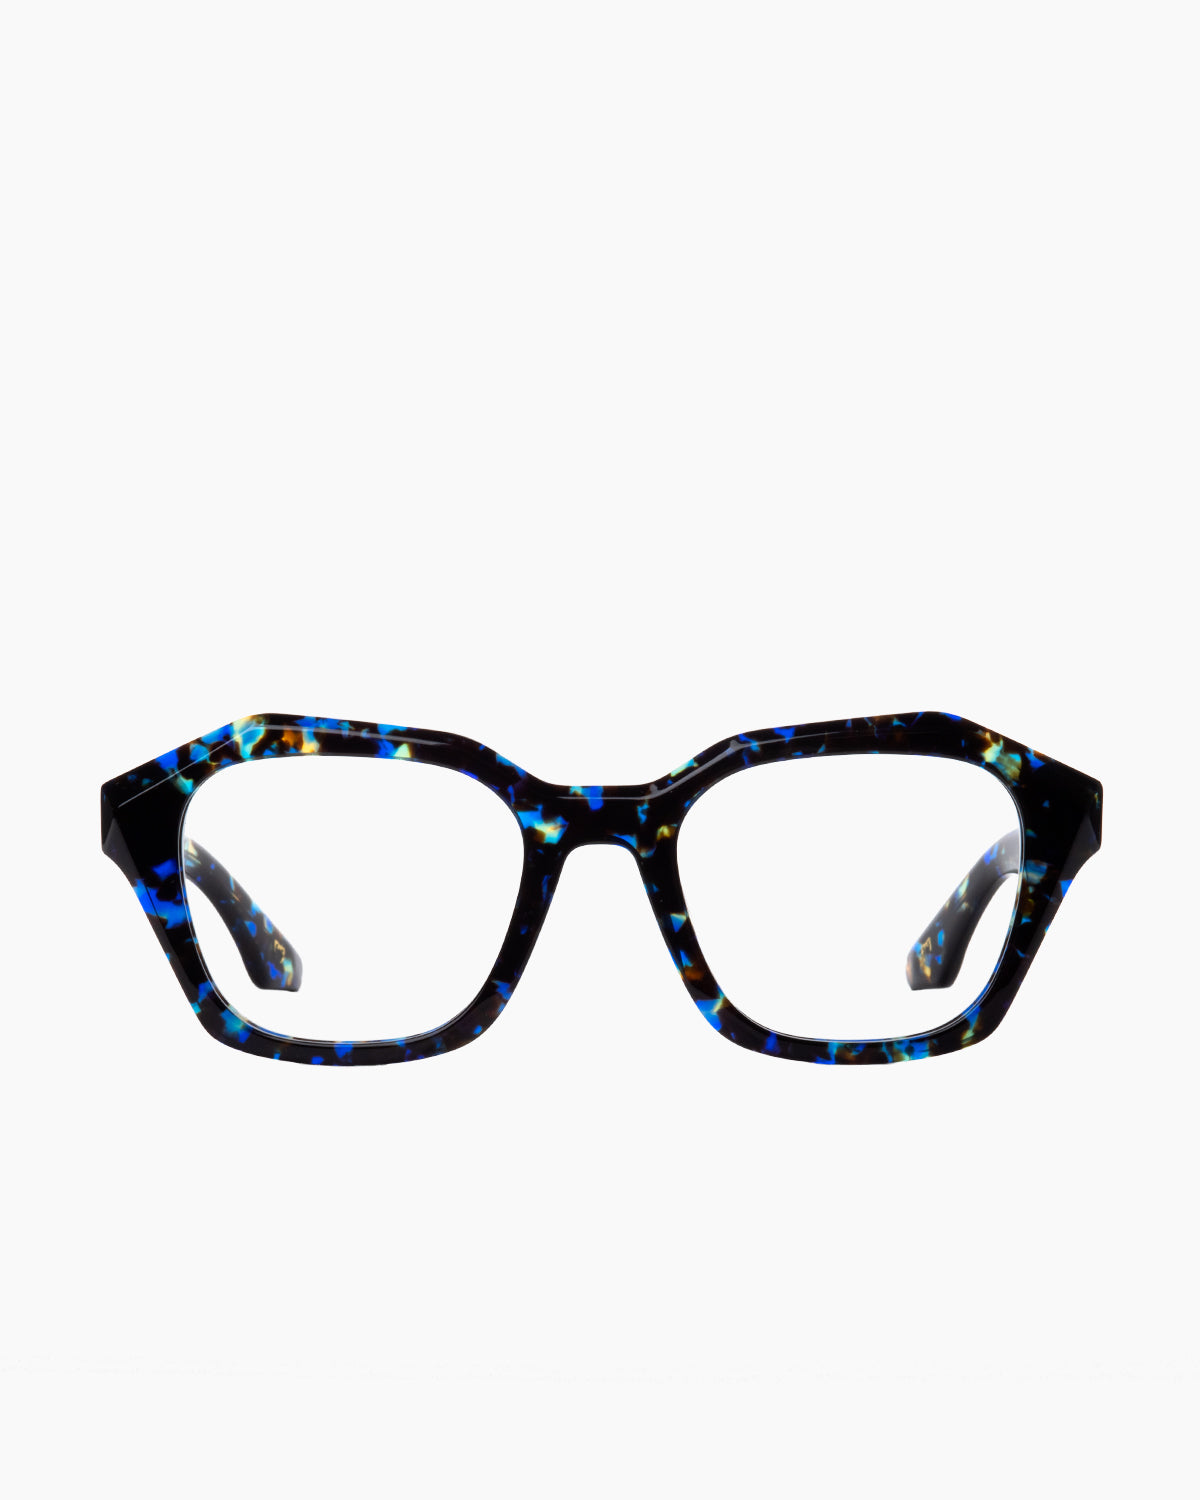 Spectacleeyeworks - Nada - c716 | Bar à lunettes